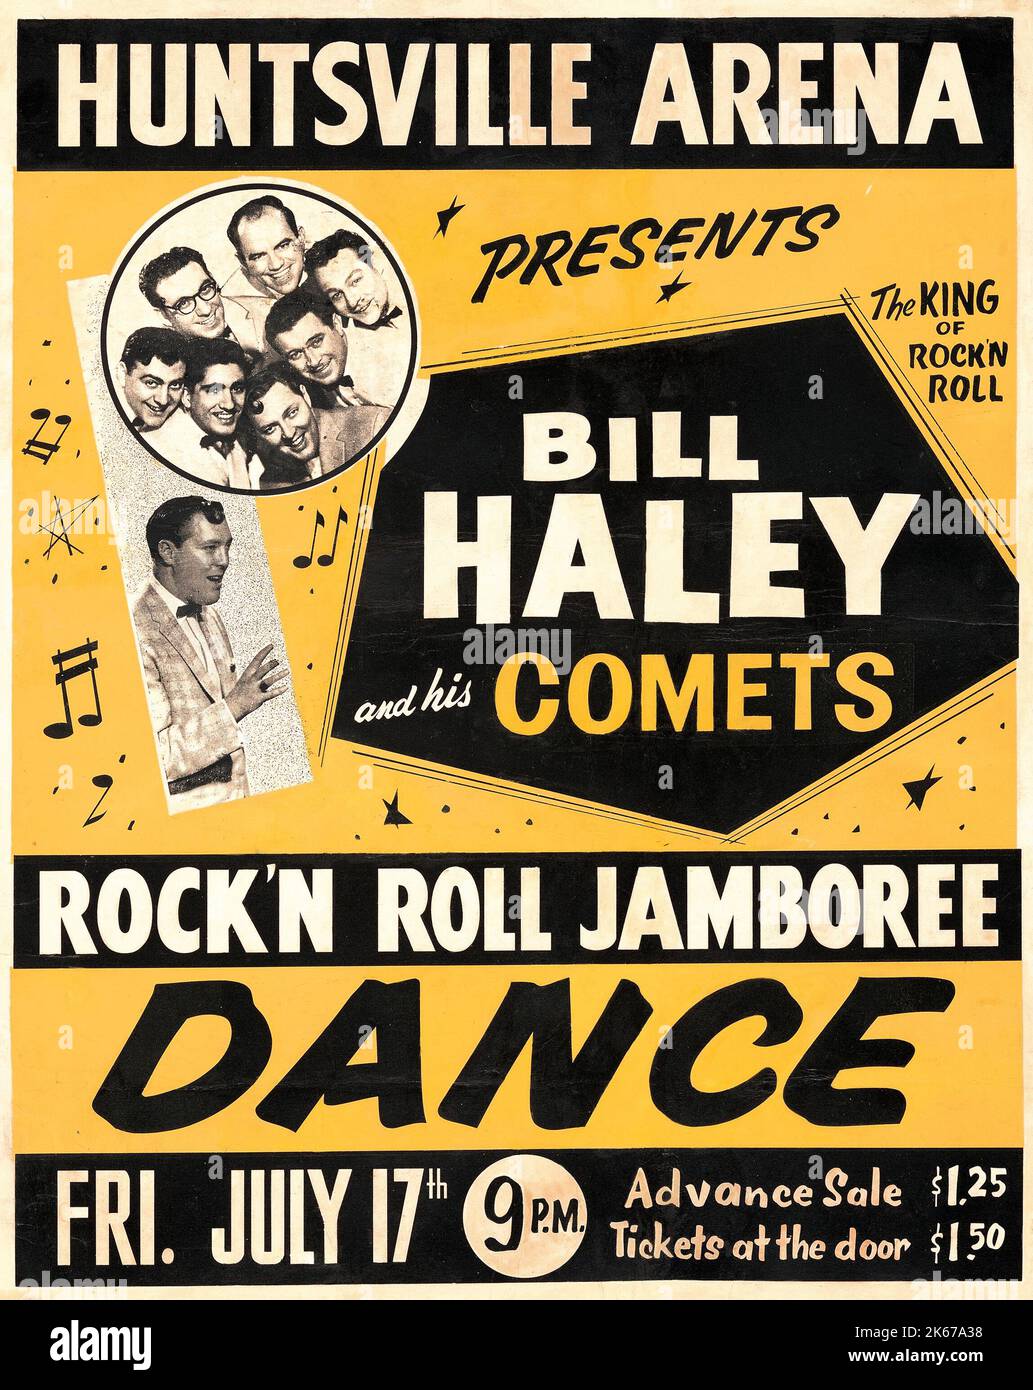 Bill Haley & His Comete 1959 Rock & Roll Jamboree - Danza - Jumbo Concert Poster - Huntsville Arena Foto Stock